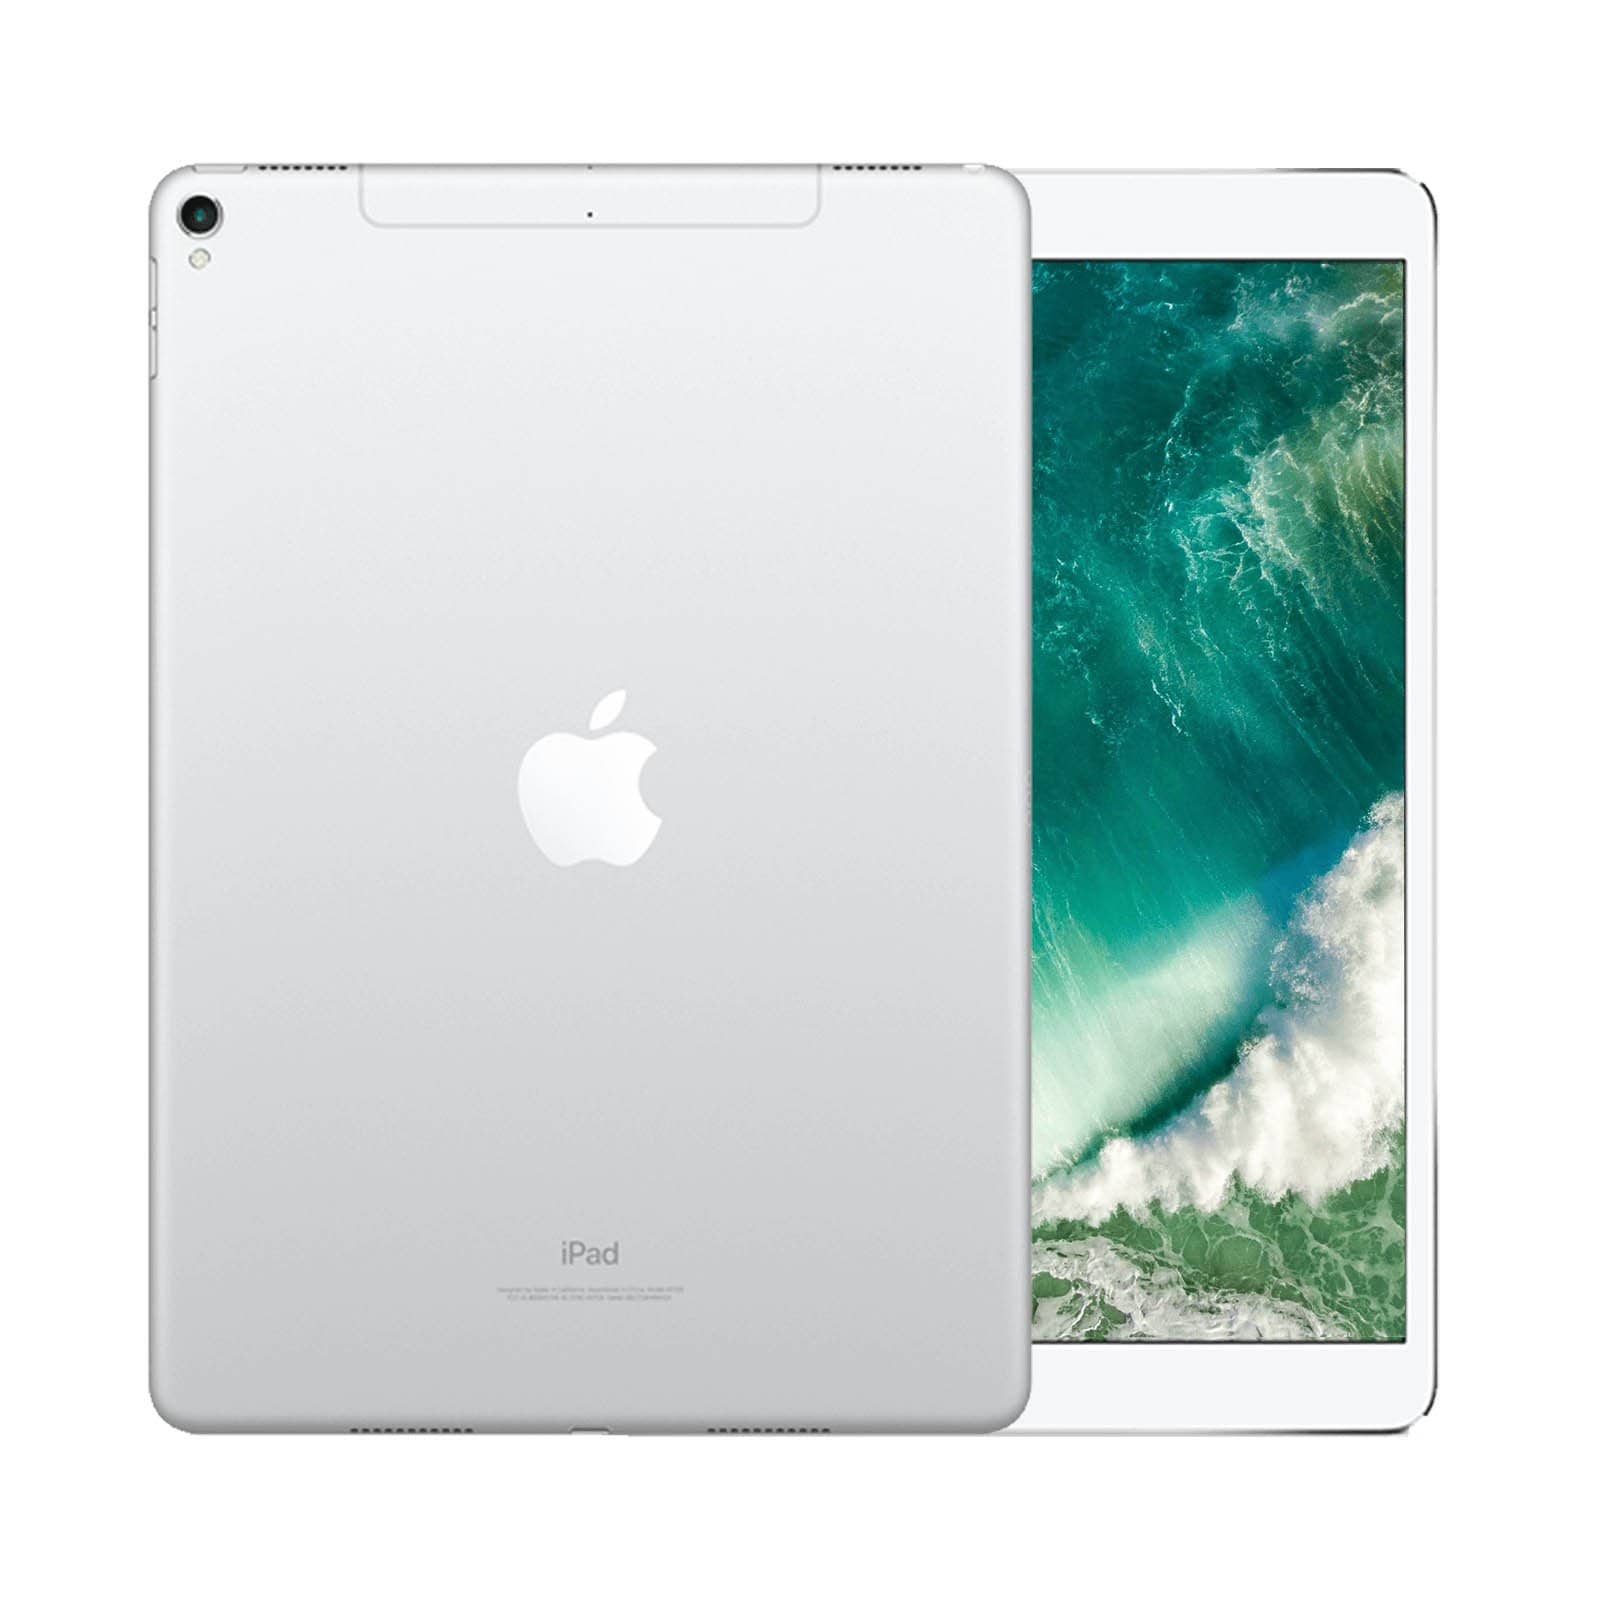 iPad Pro 10.5 Inch 64GB Silver Very Good - Unlocked 64GB Silver Very Good